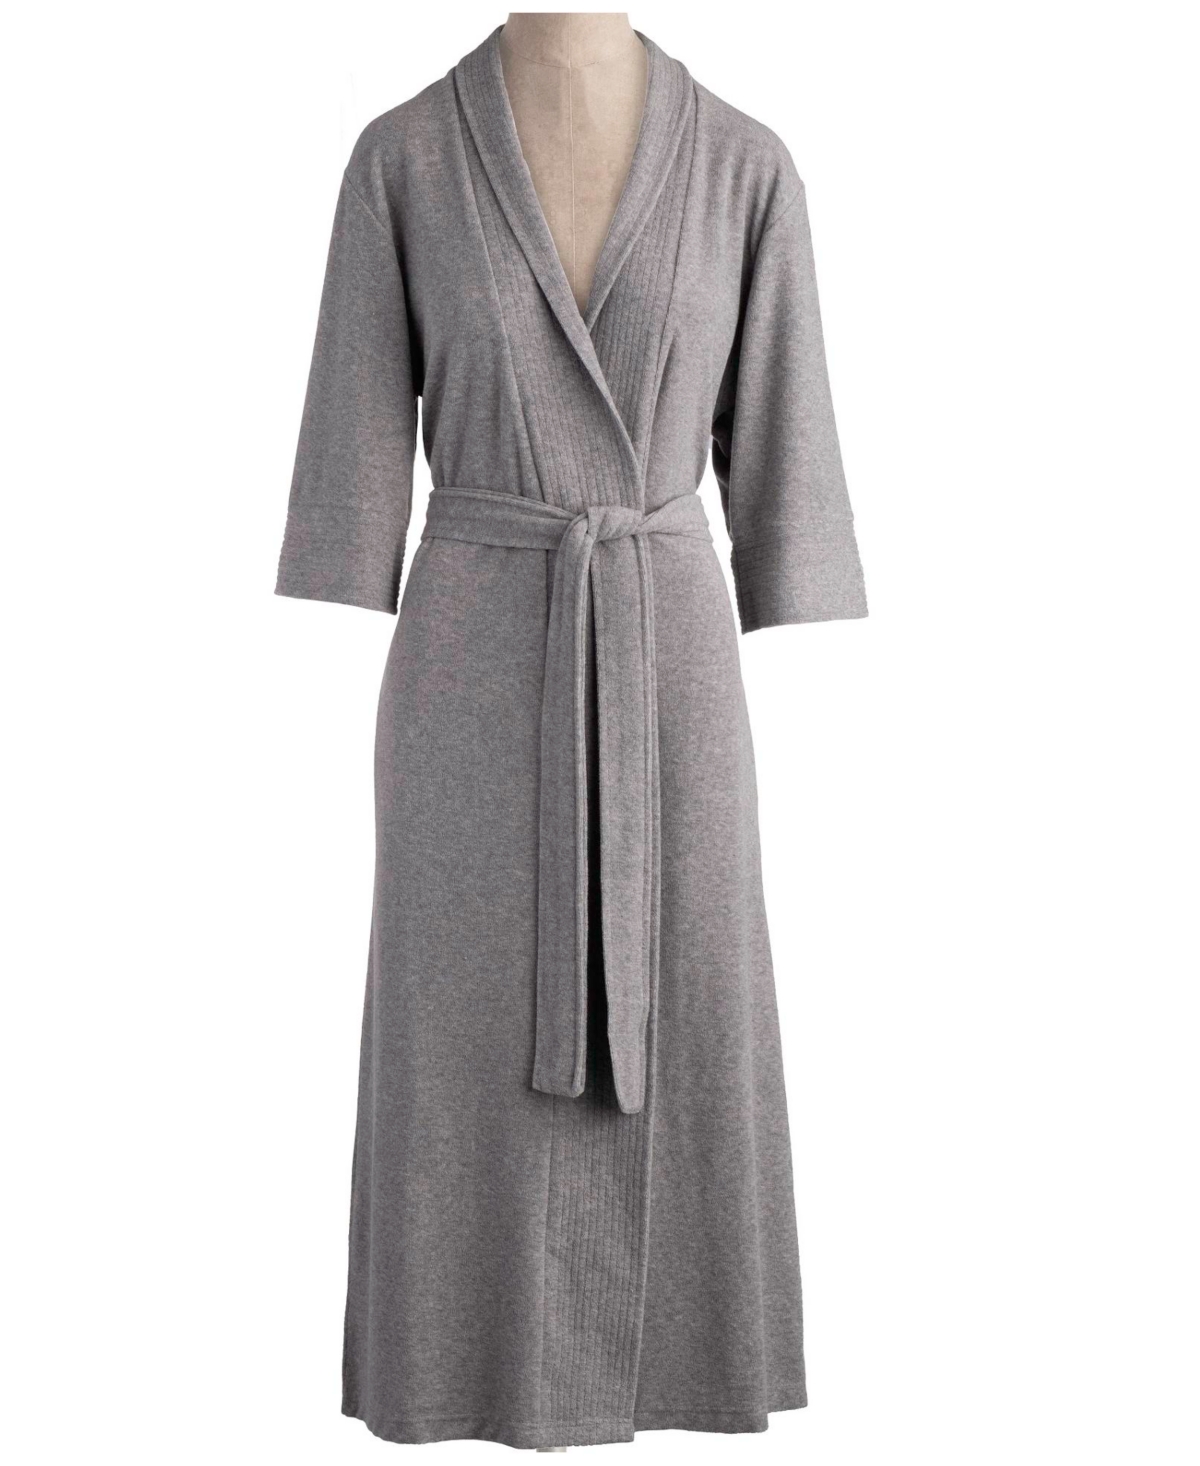 Shop Cassadecor Sophia Cotton And Polyester Bath Robe In Gray